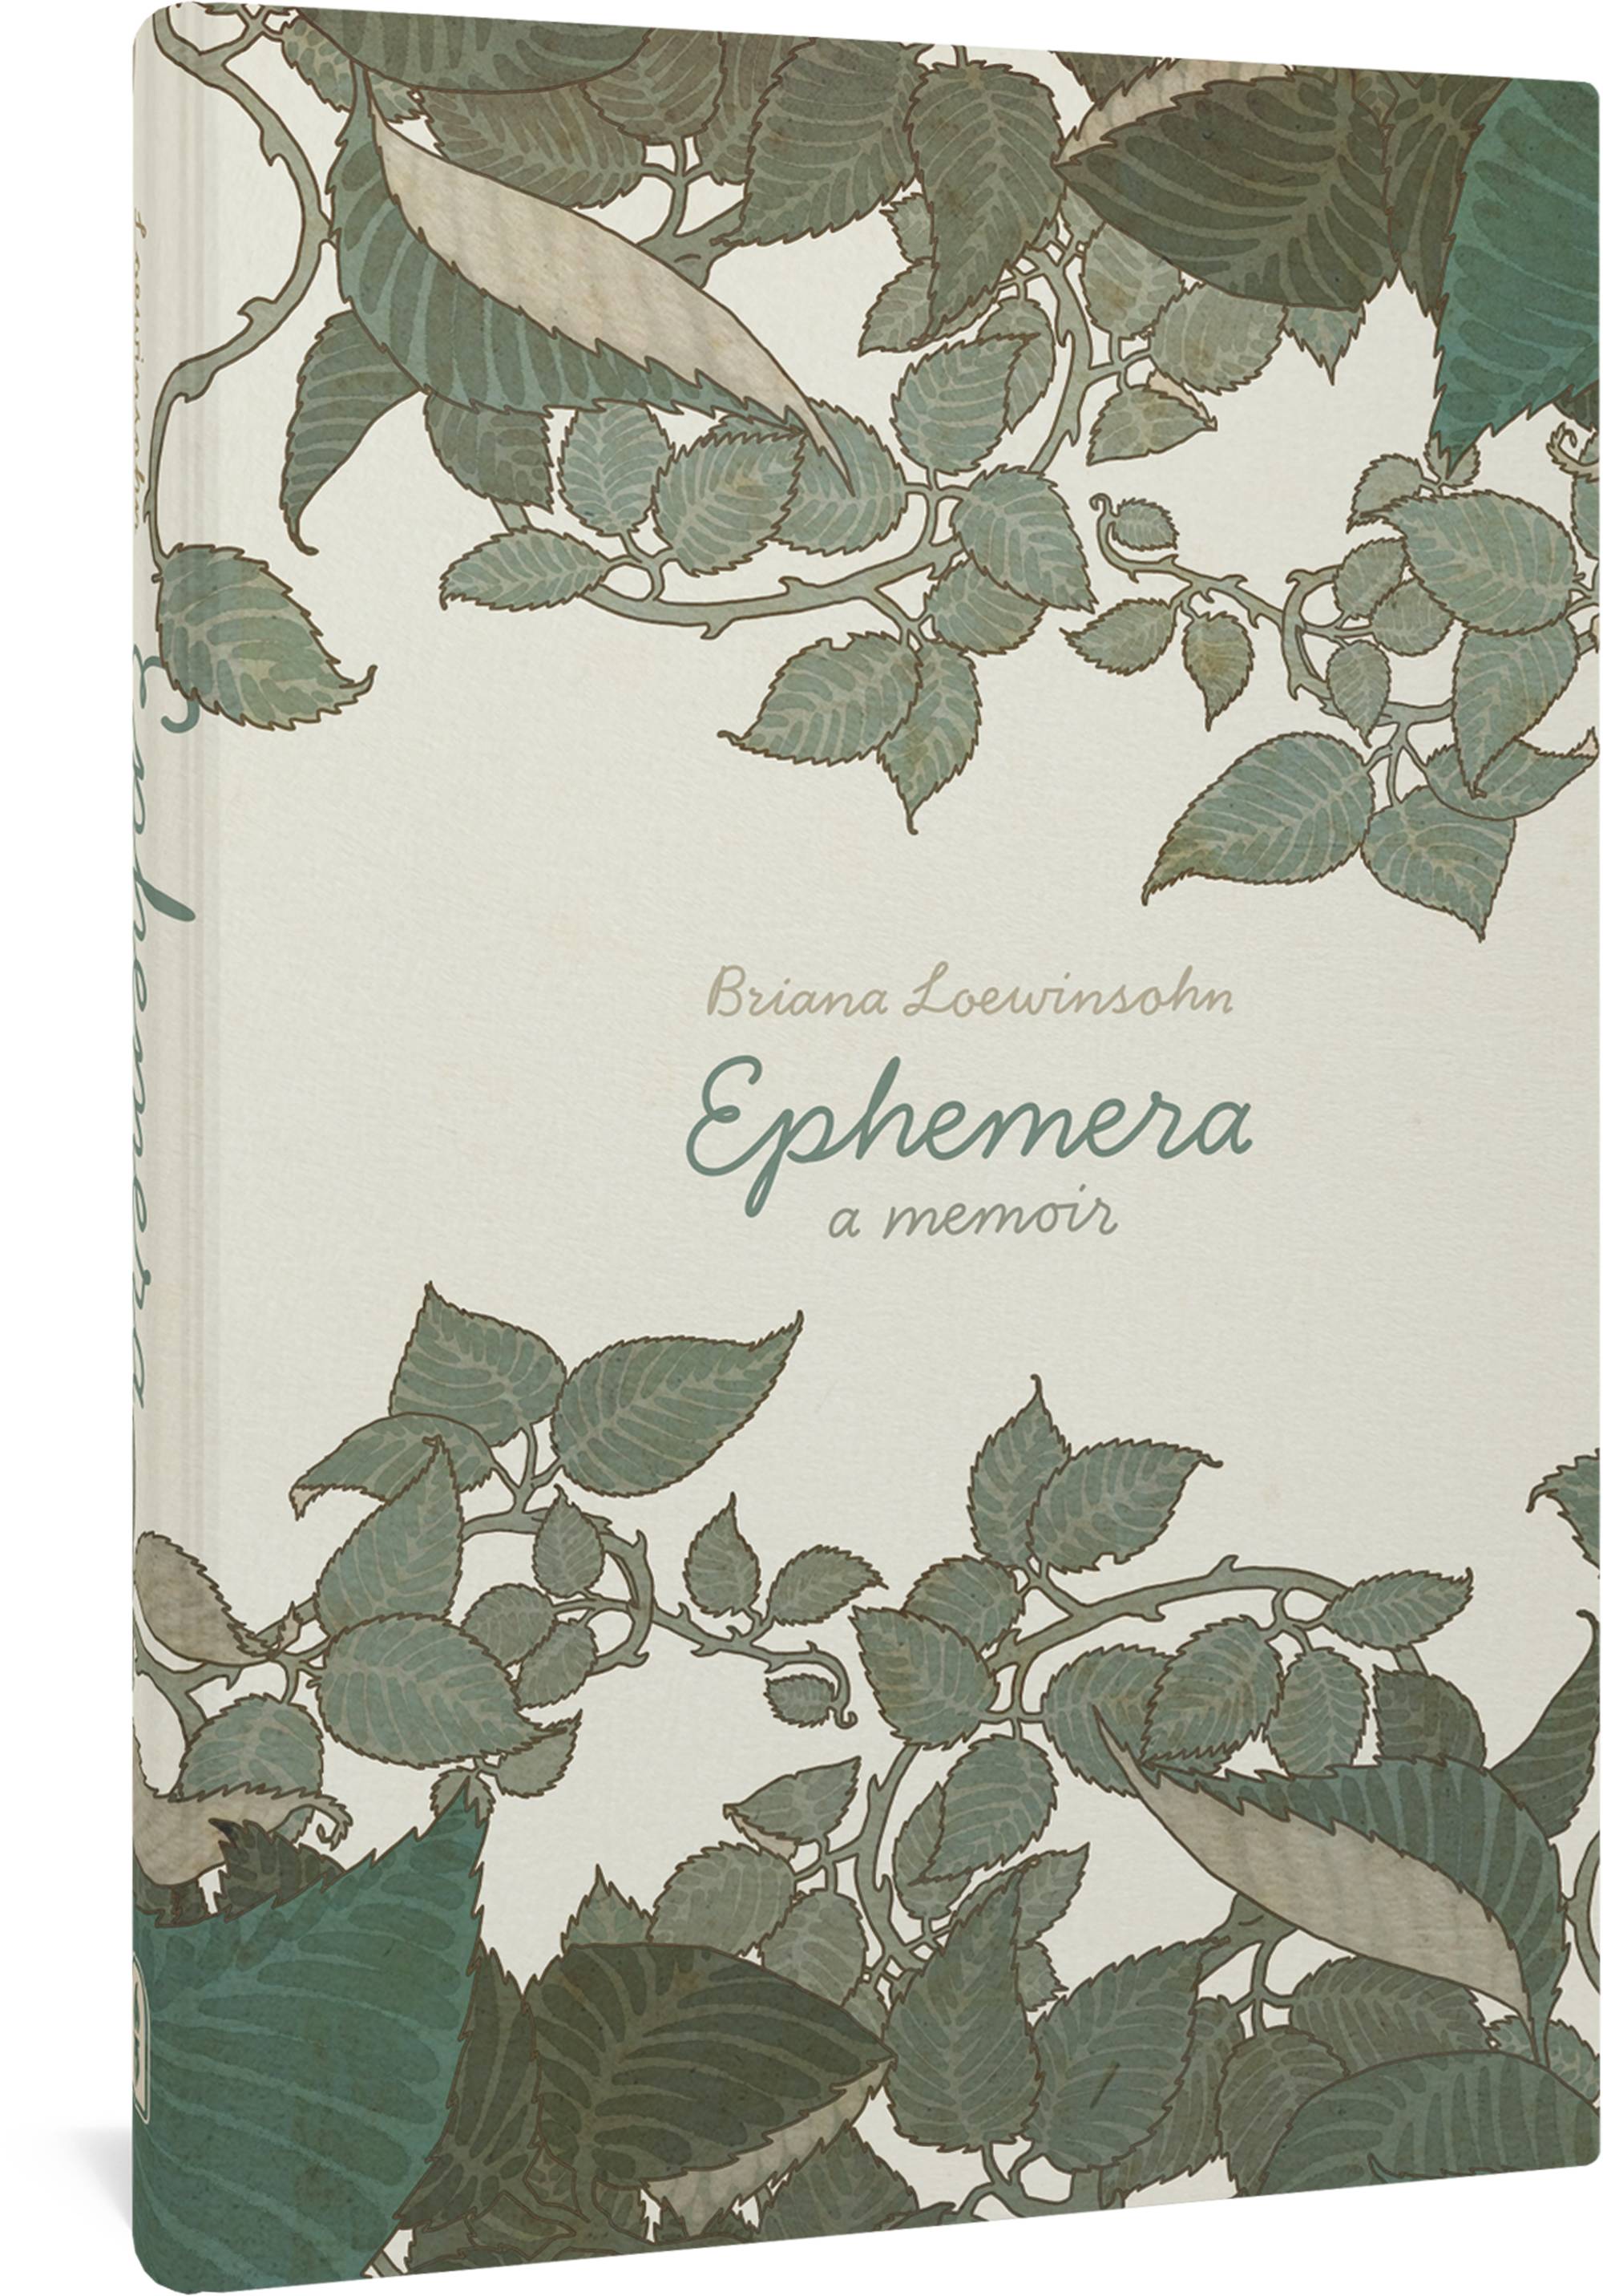 Ephemera: A Memoir h/c